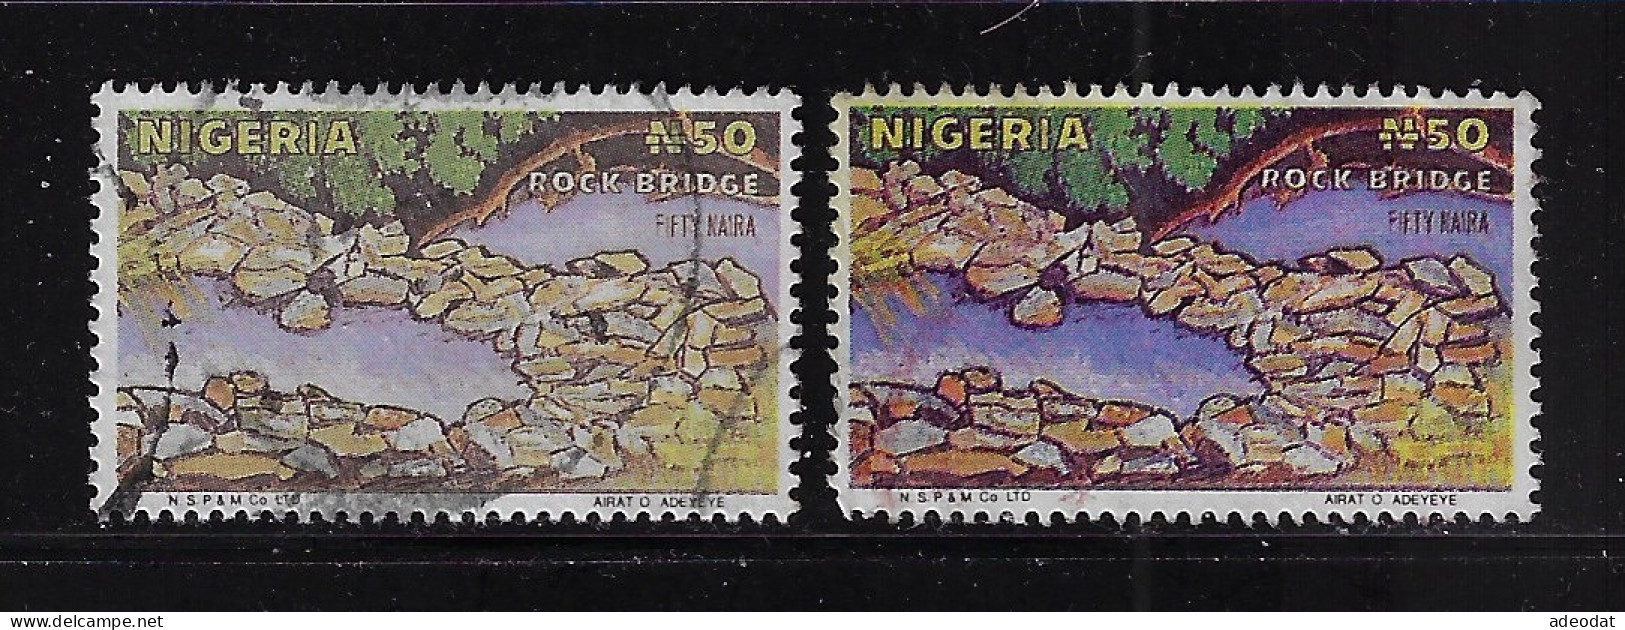 NIGERIA  1990  SCOTT#560B (2) USED  CV $25.00 - Nigeria (1961-...)